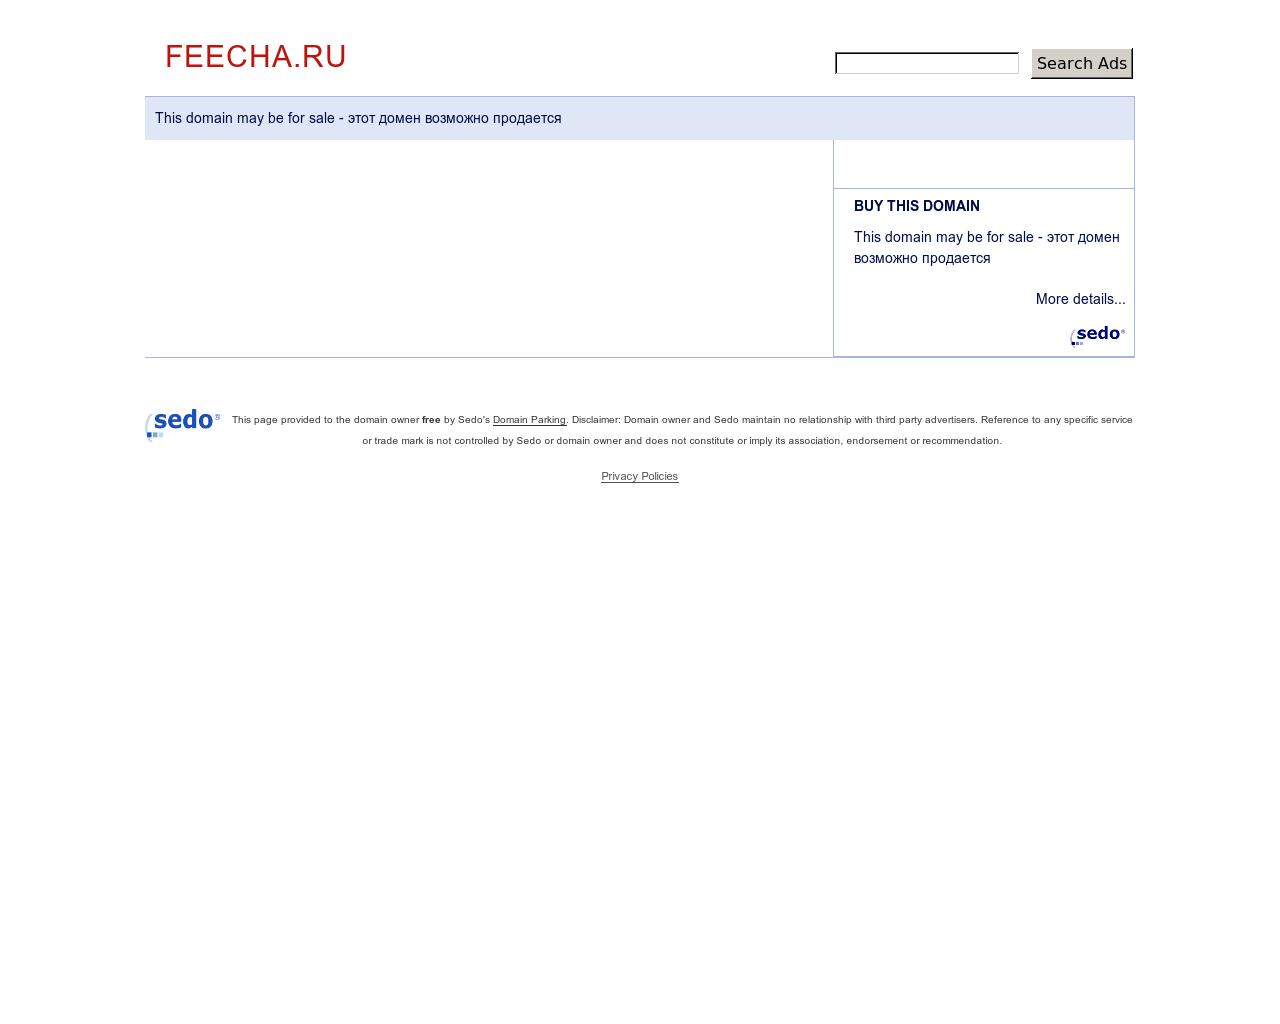 Изображение сайта feecha.ru в разрешении 1280x1024